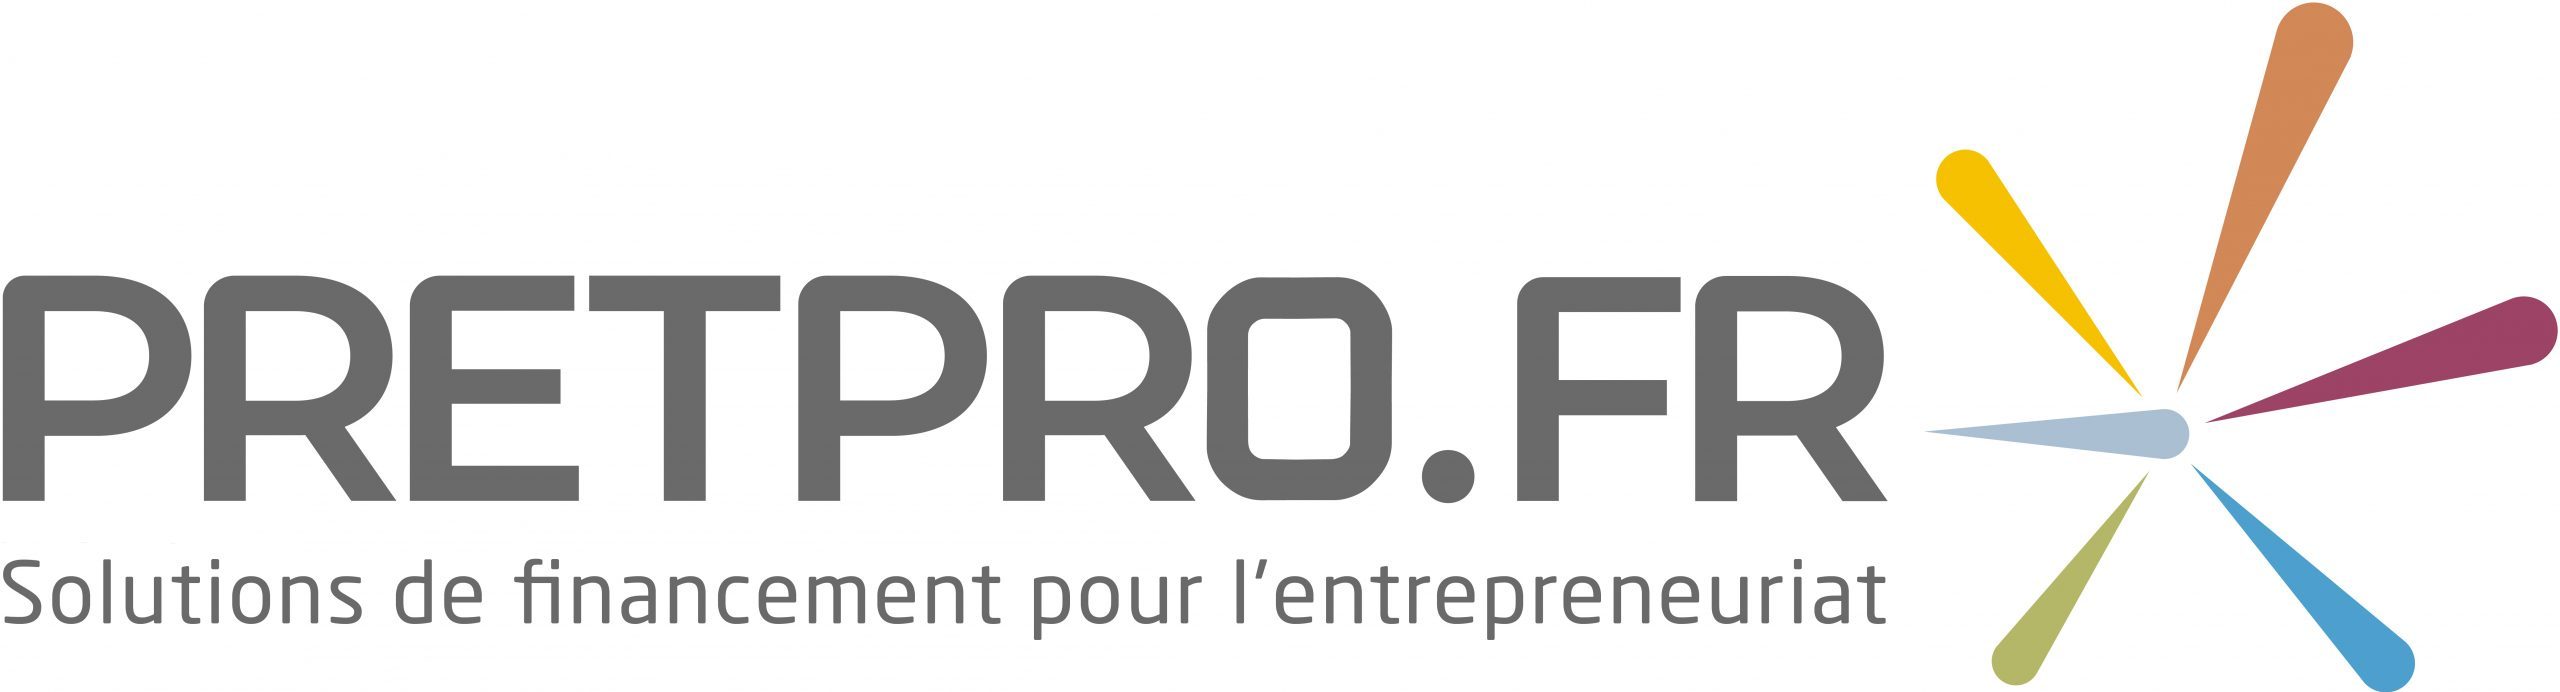 Pretpro.fr – Bretagne